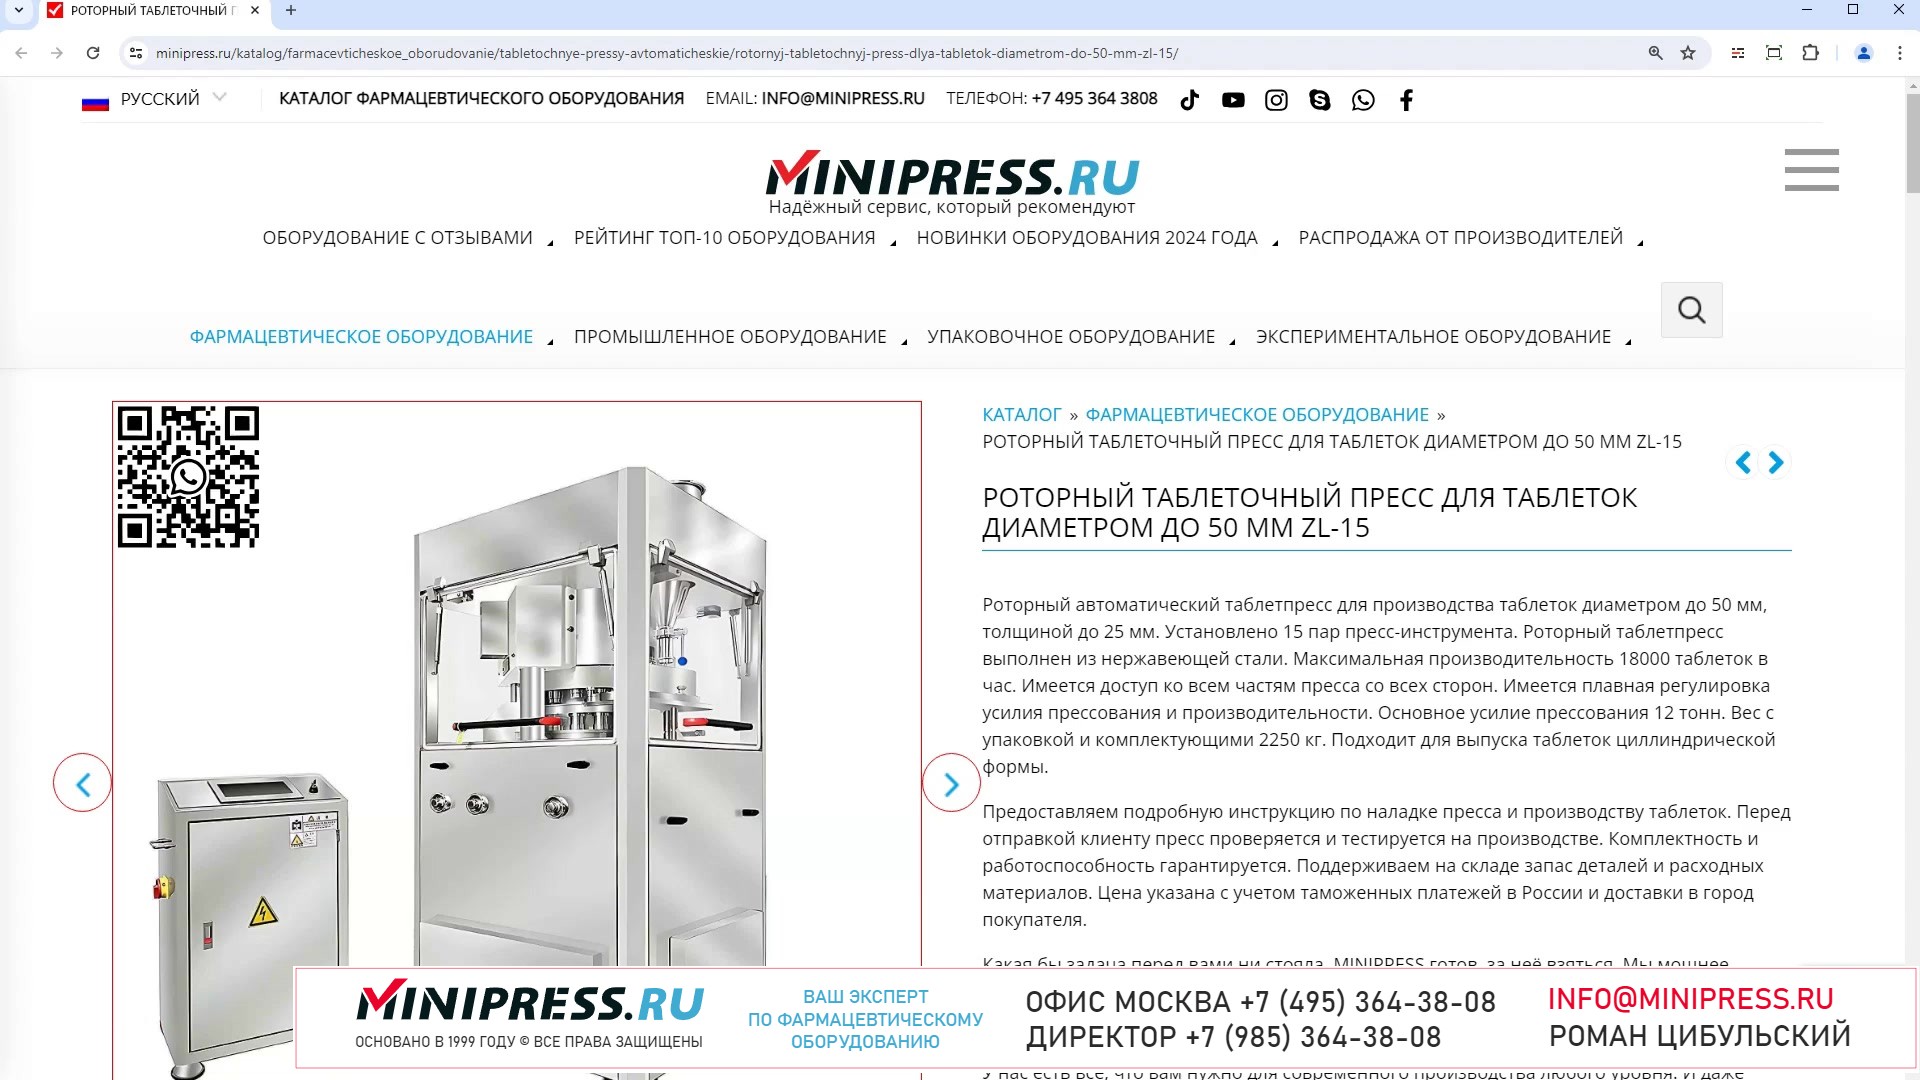 Minipress.ru Роторный таблеточный пресс для таблеток диаметром до 50 мм ZL-15